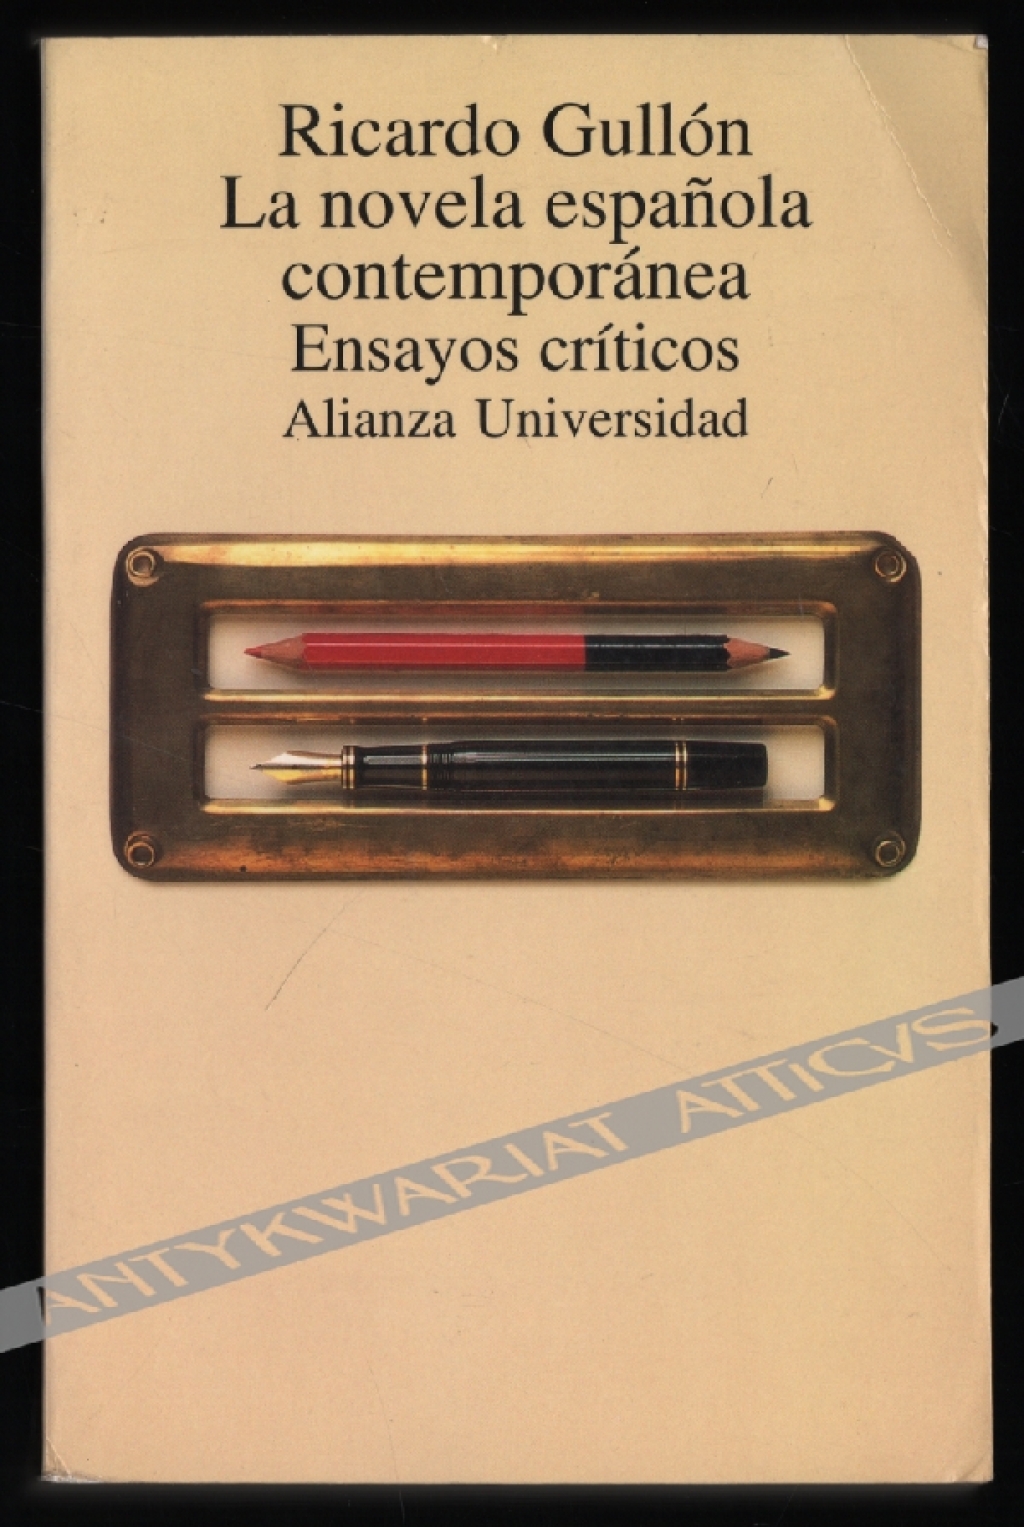 La novela espanola contemporanea. Ensayos criticos